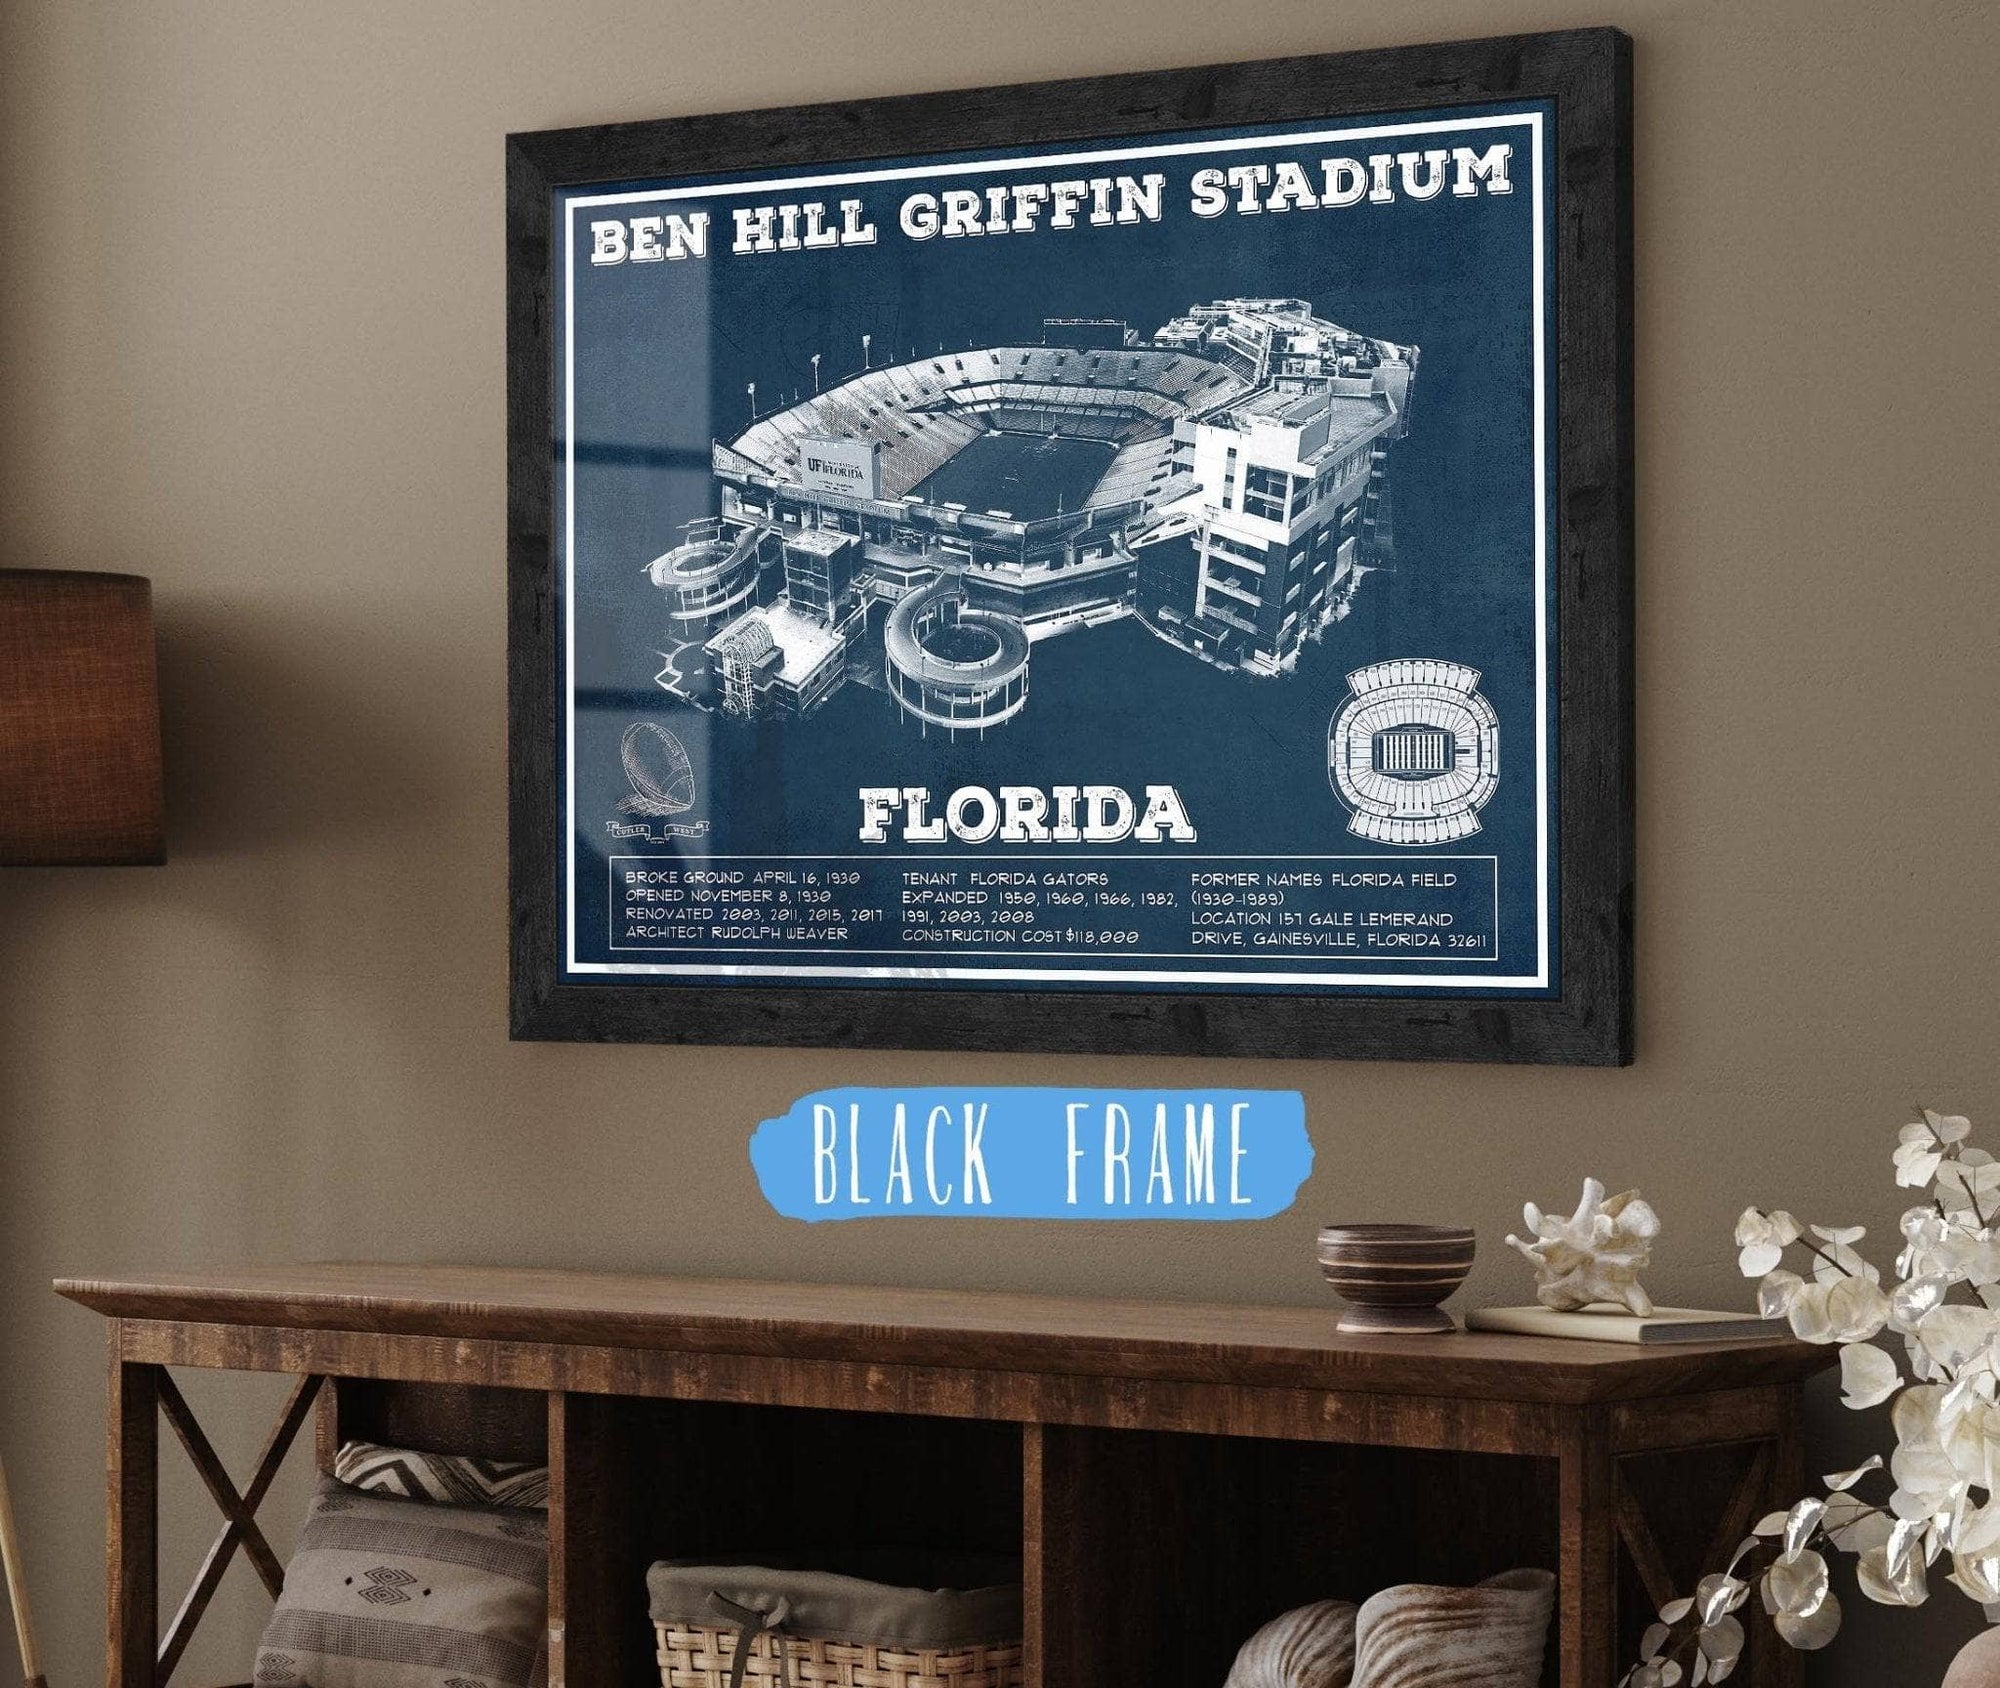 Cutler West Pro Football Collection 14" x 11" / Black Frame Ben Hill Griffin Stadium Art - University of Florida Gators Vintage Stadium Art Print 736879125_35274